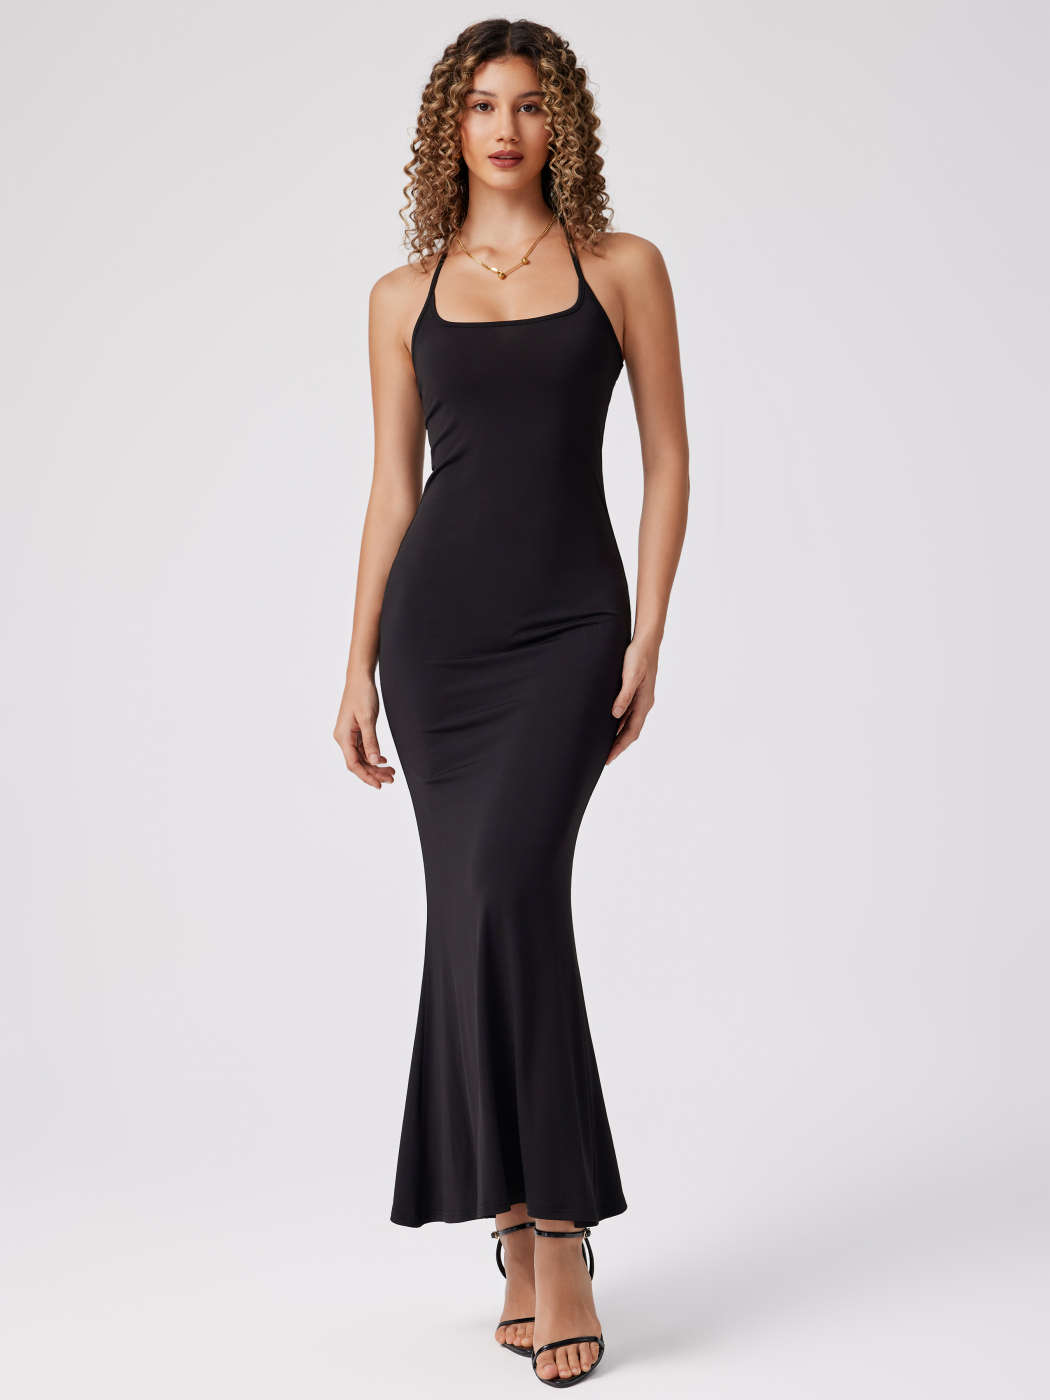 Black Halter Maxi Dress - Halter Maxi Dress - Mermaid Maxi Dress